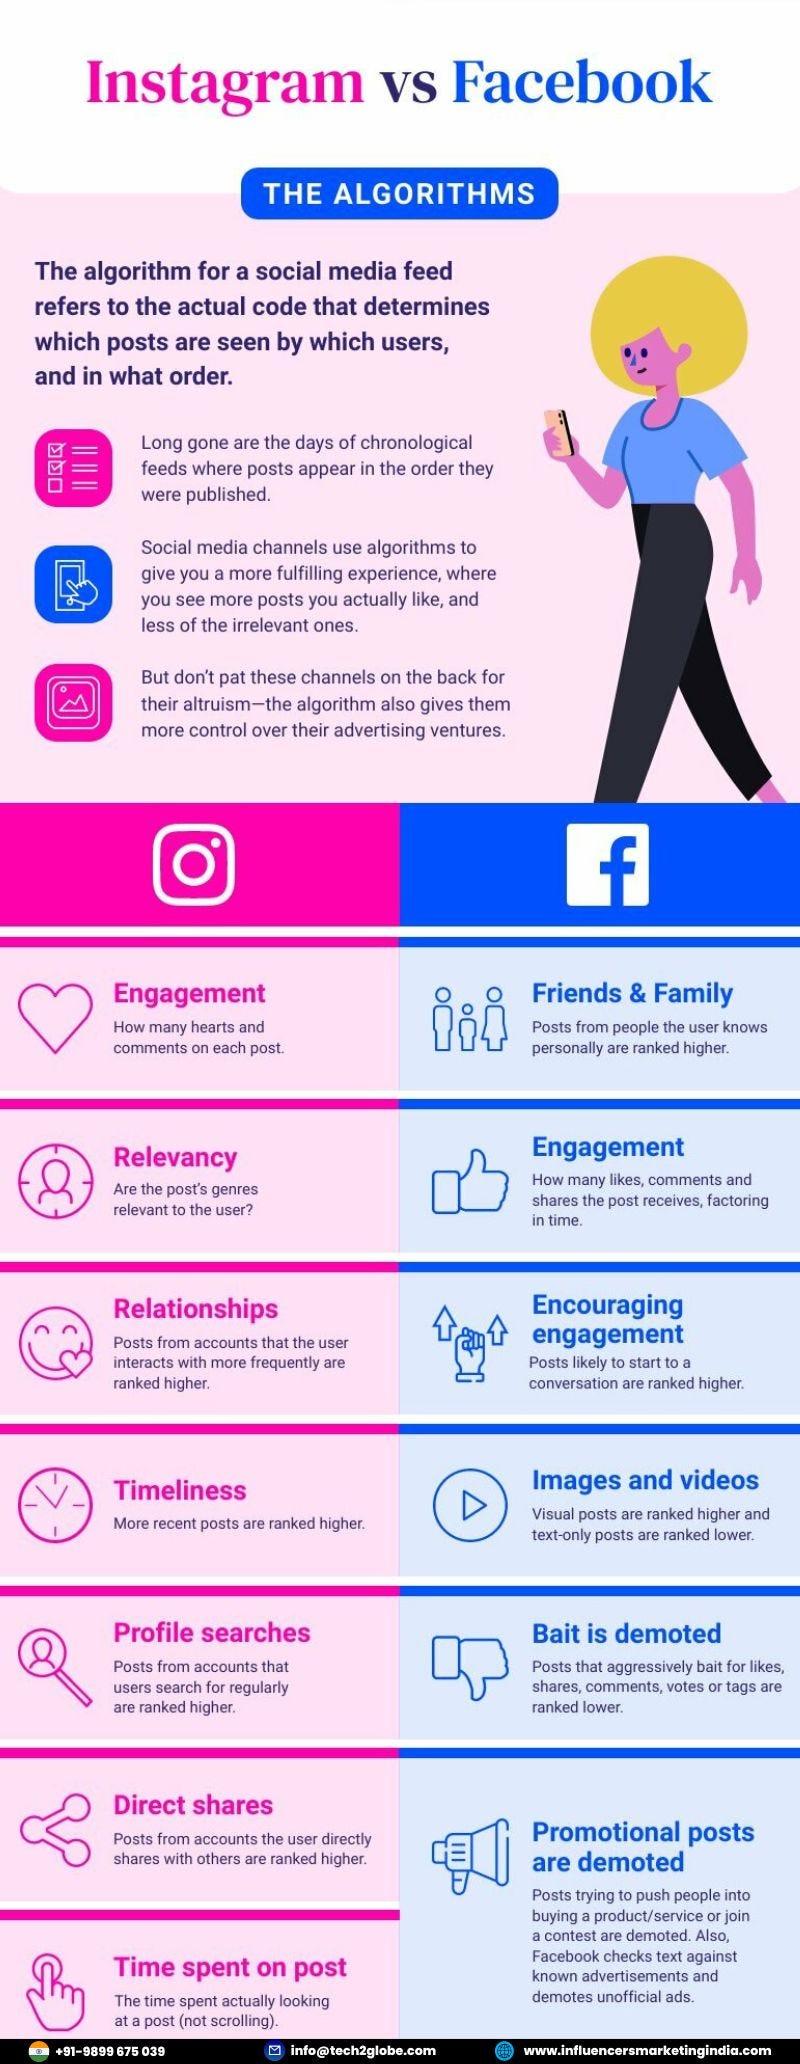 Instagram Vs. Facebook: What’s The Better Marketing Avenue?